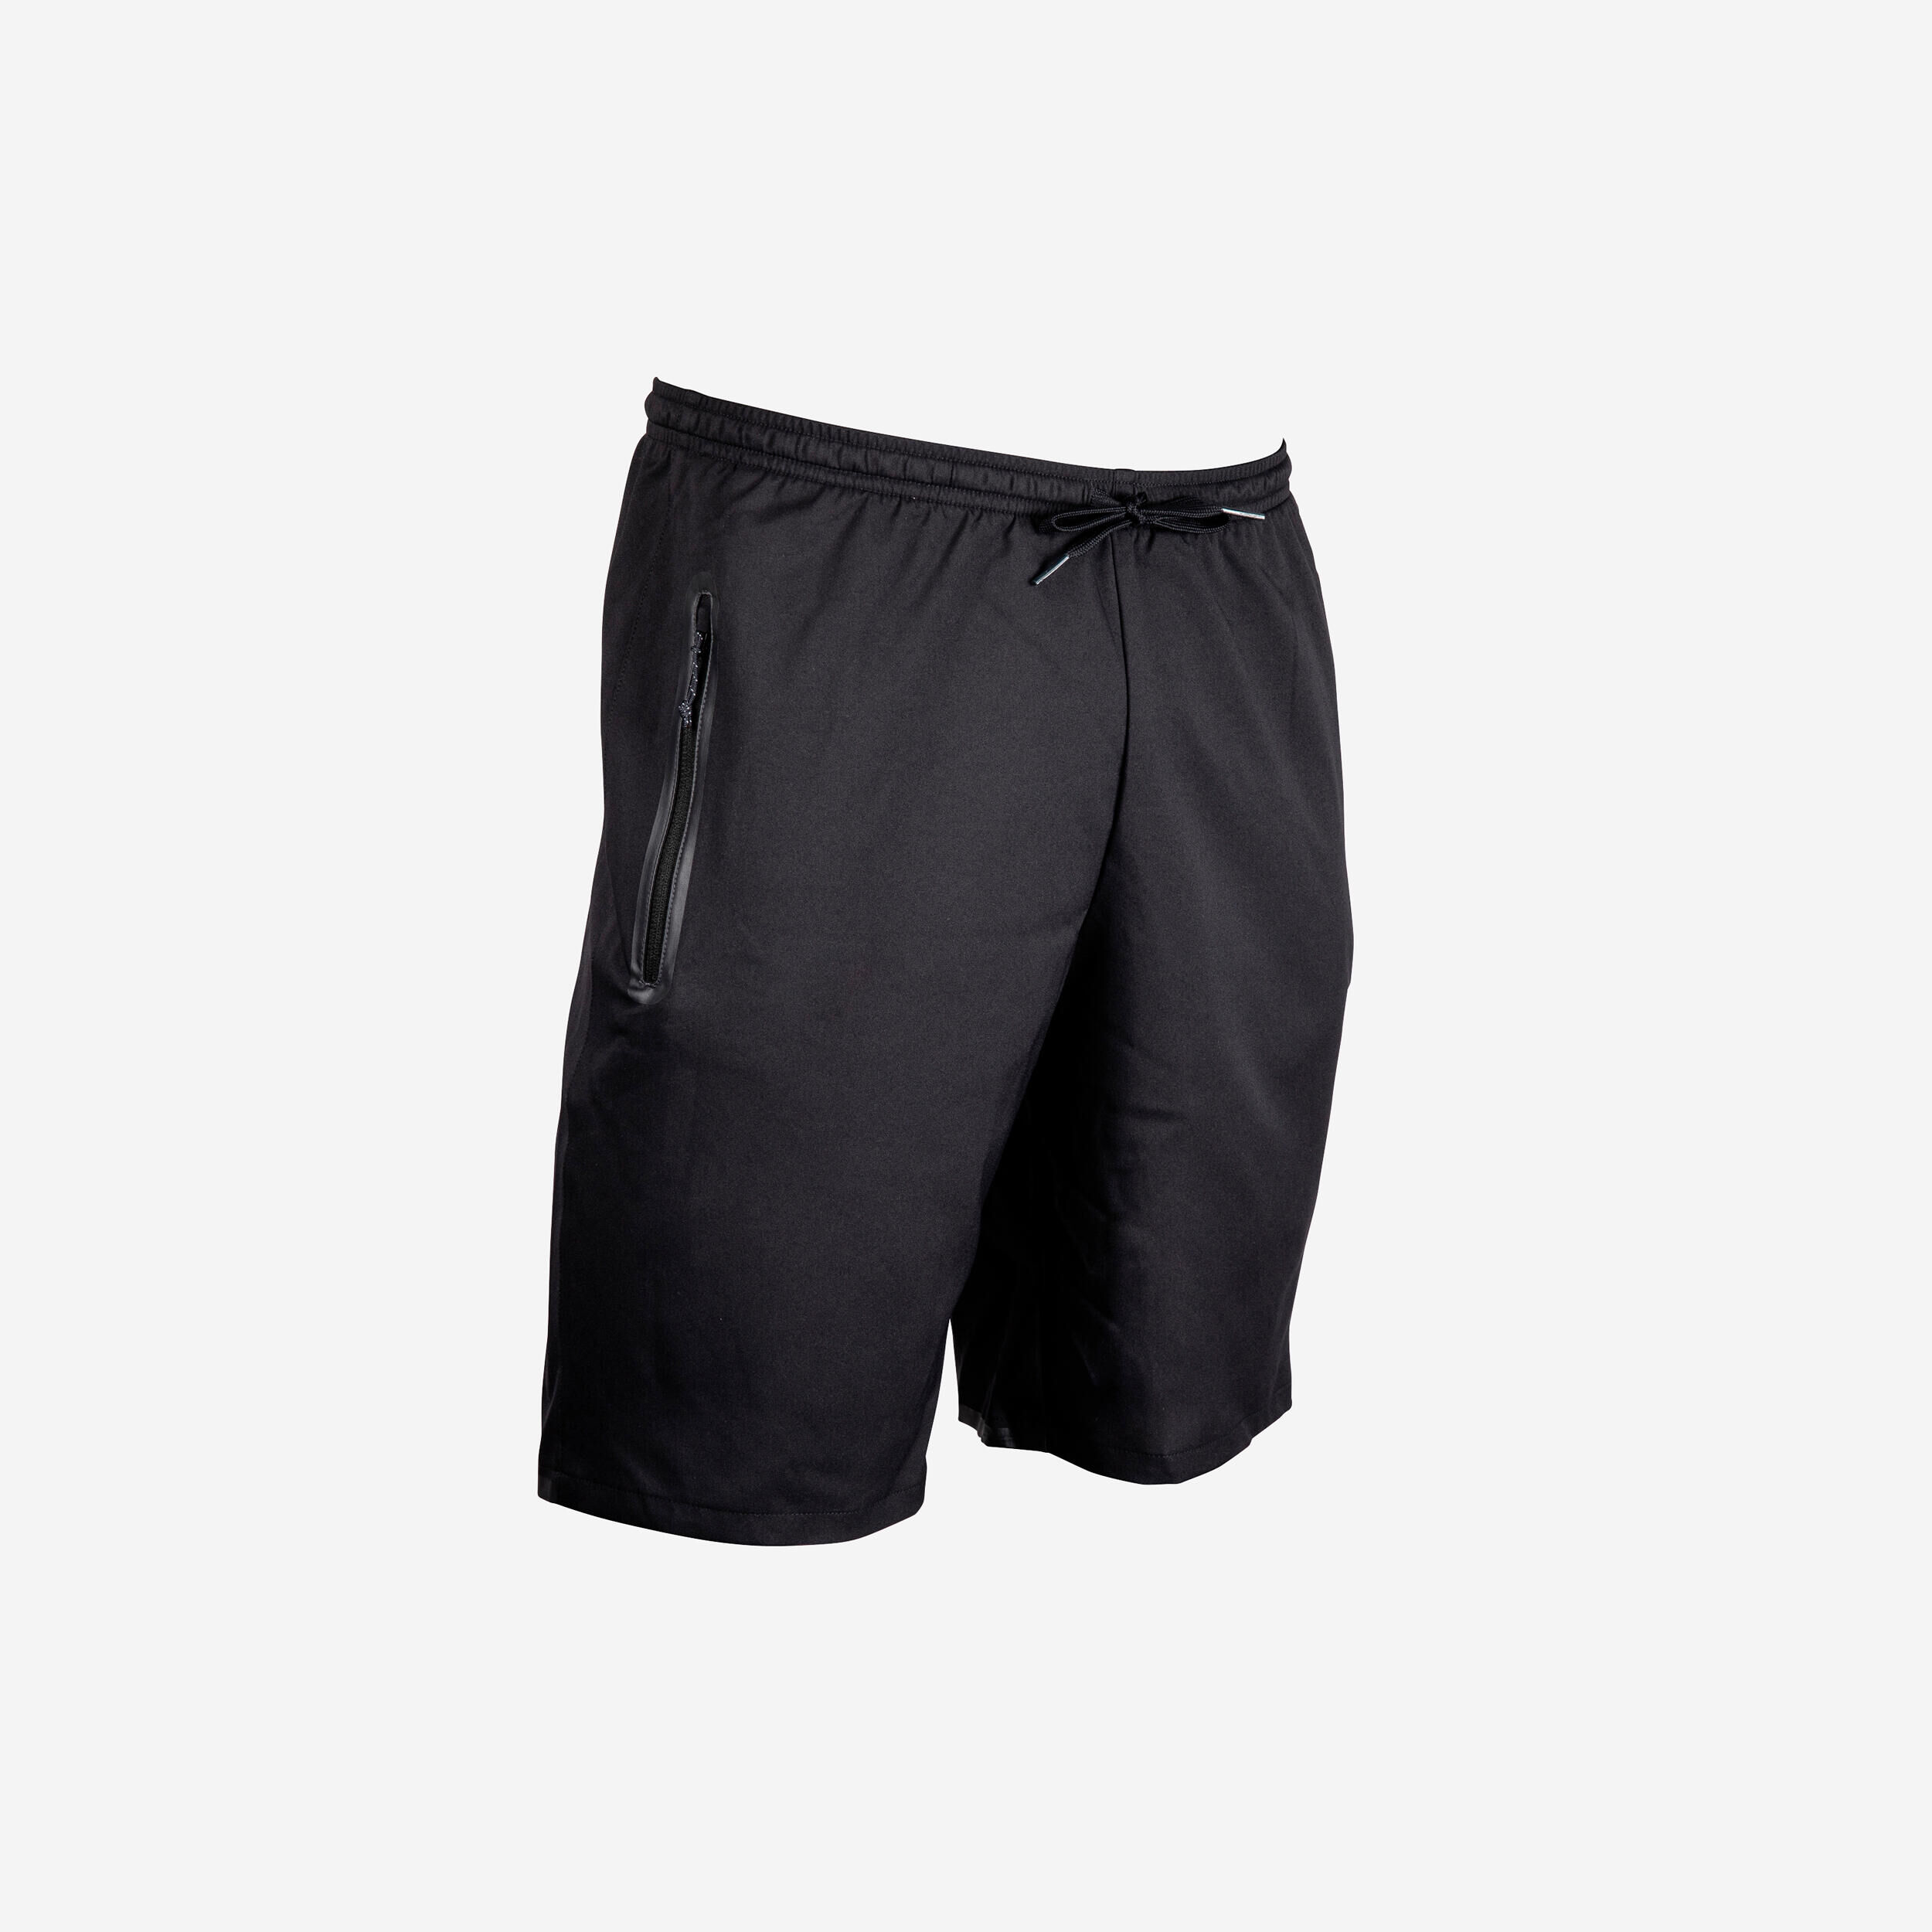 KIPSTA Adult Football Shorts with Zip Pockets Viralto Zip - Black/Grey